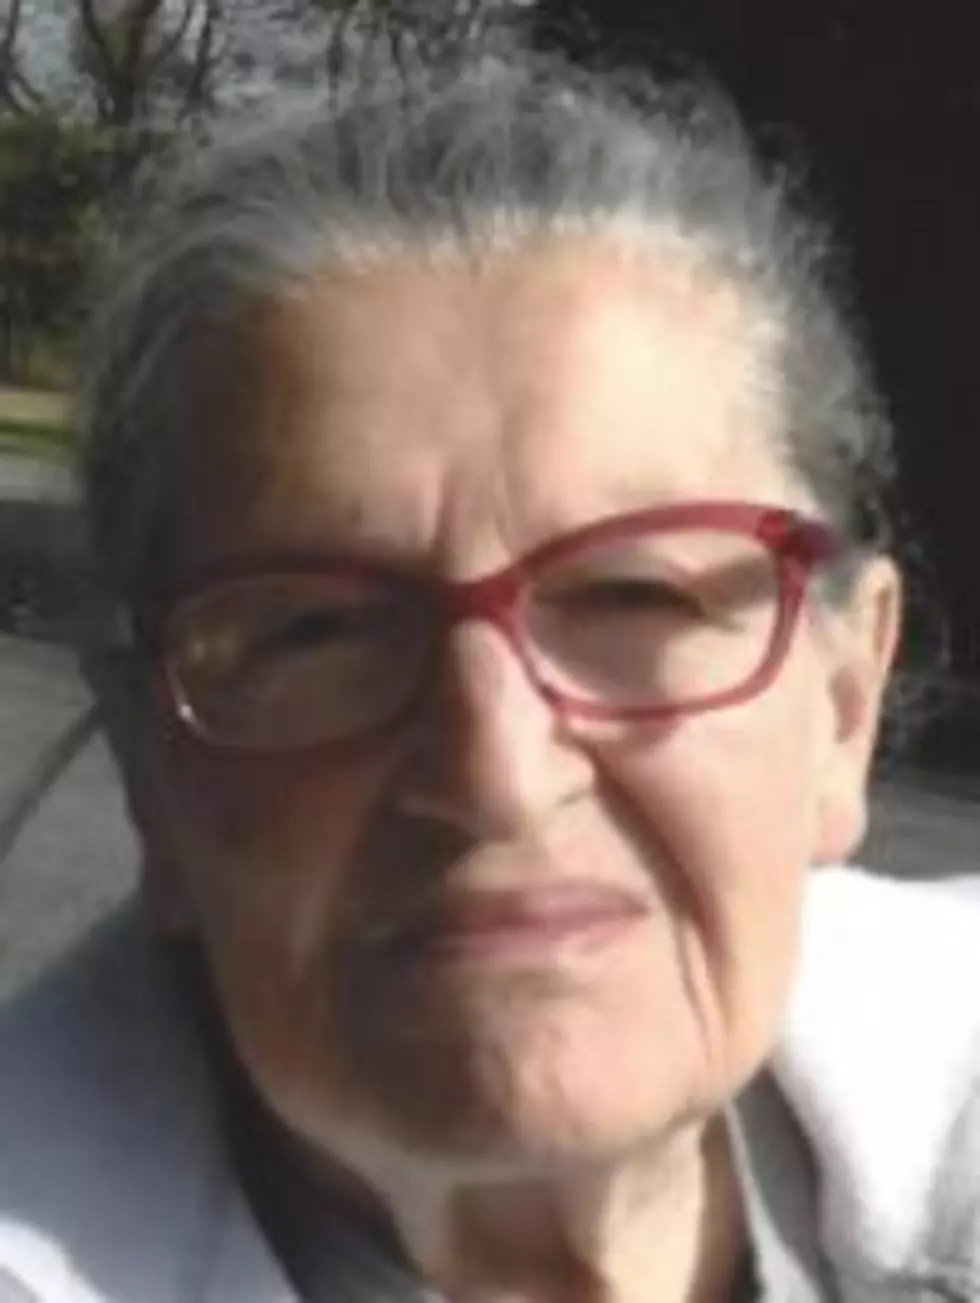 Alba Casaccia, a Resident of Novara, Italy, Dies at 85